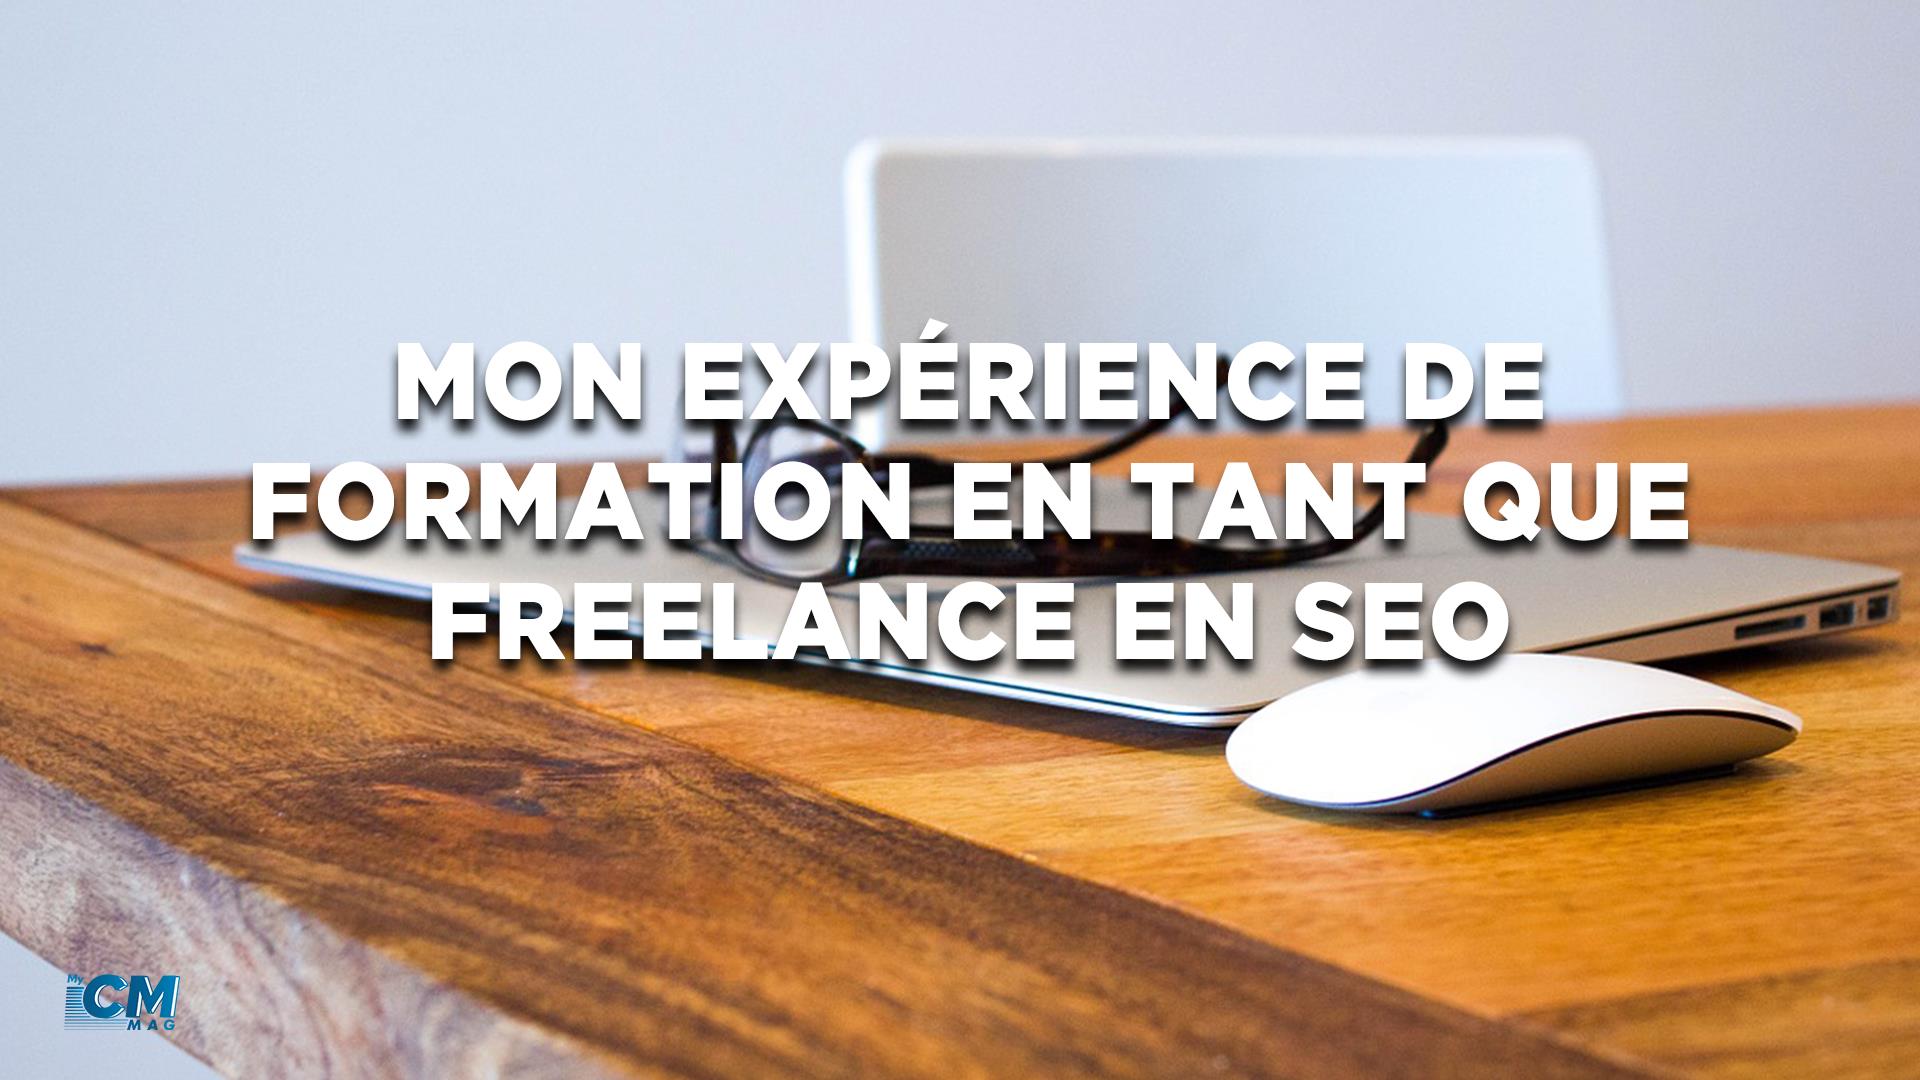 You are currently viewing Mon expérience de formation en tant que Freelance en SEO !